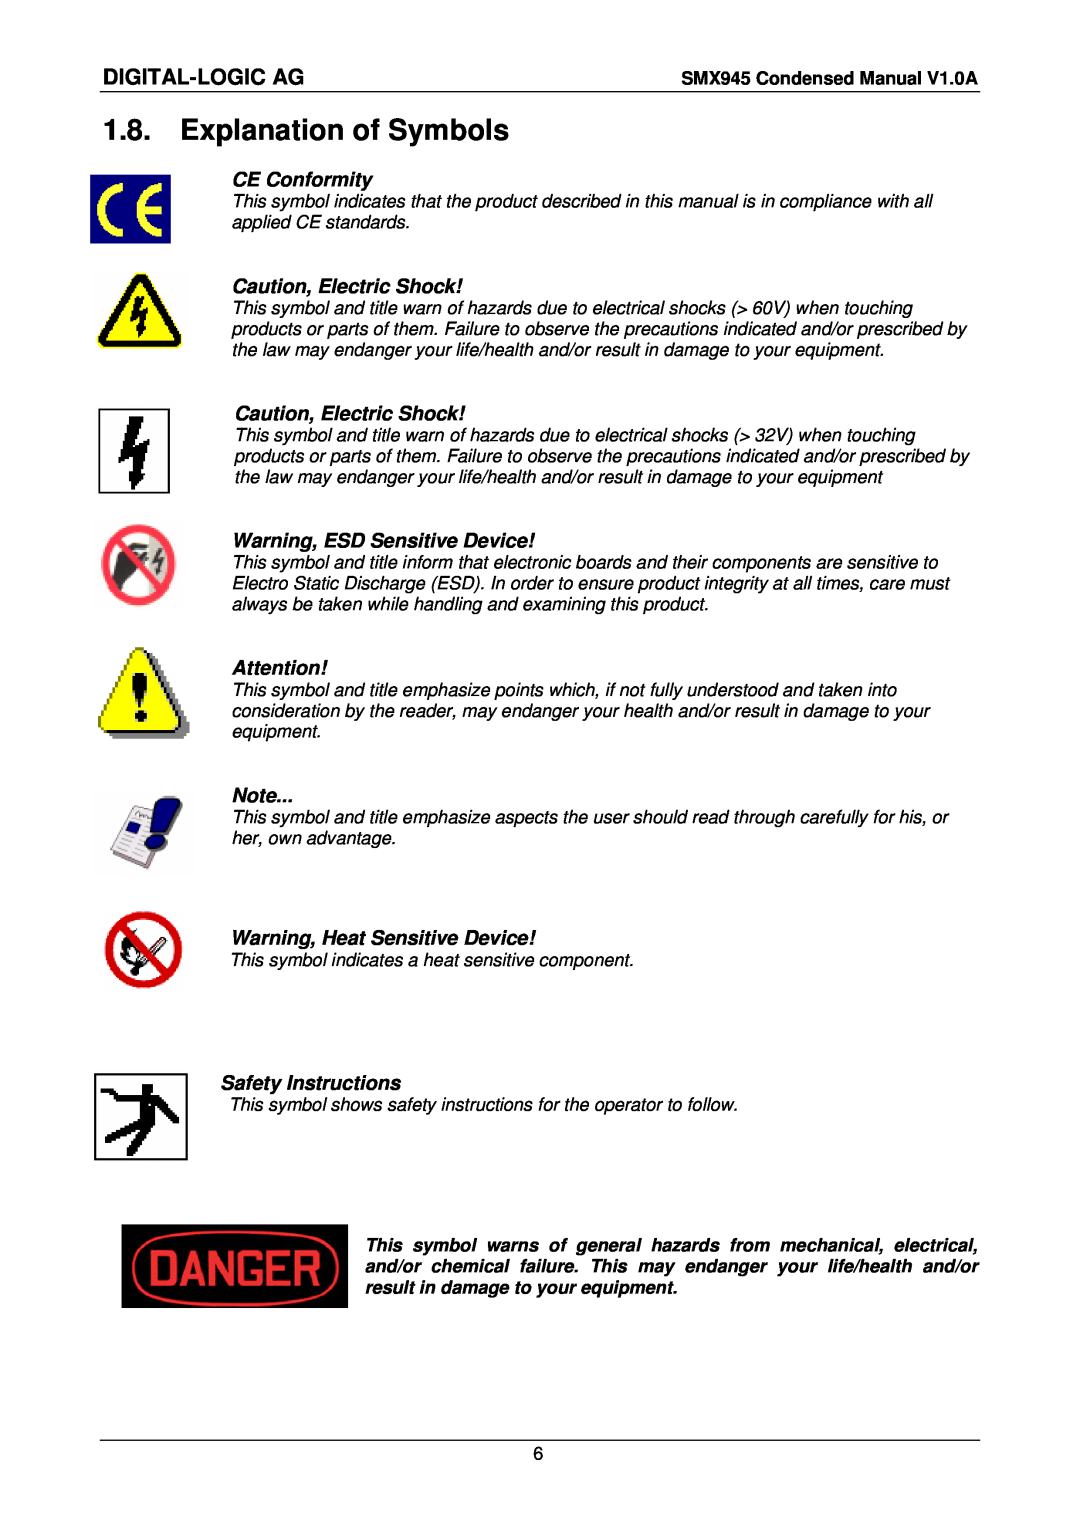 Compaq SMX945 user manual Explanation of Symbols, CE Conformity, Caution, Electric Shock, Warning, ESD Sensitive Device 